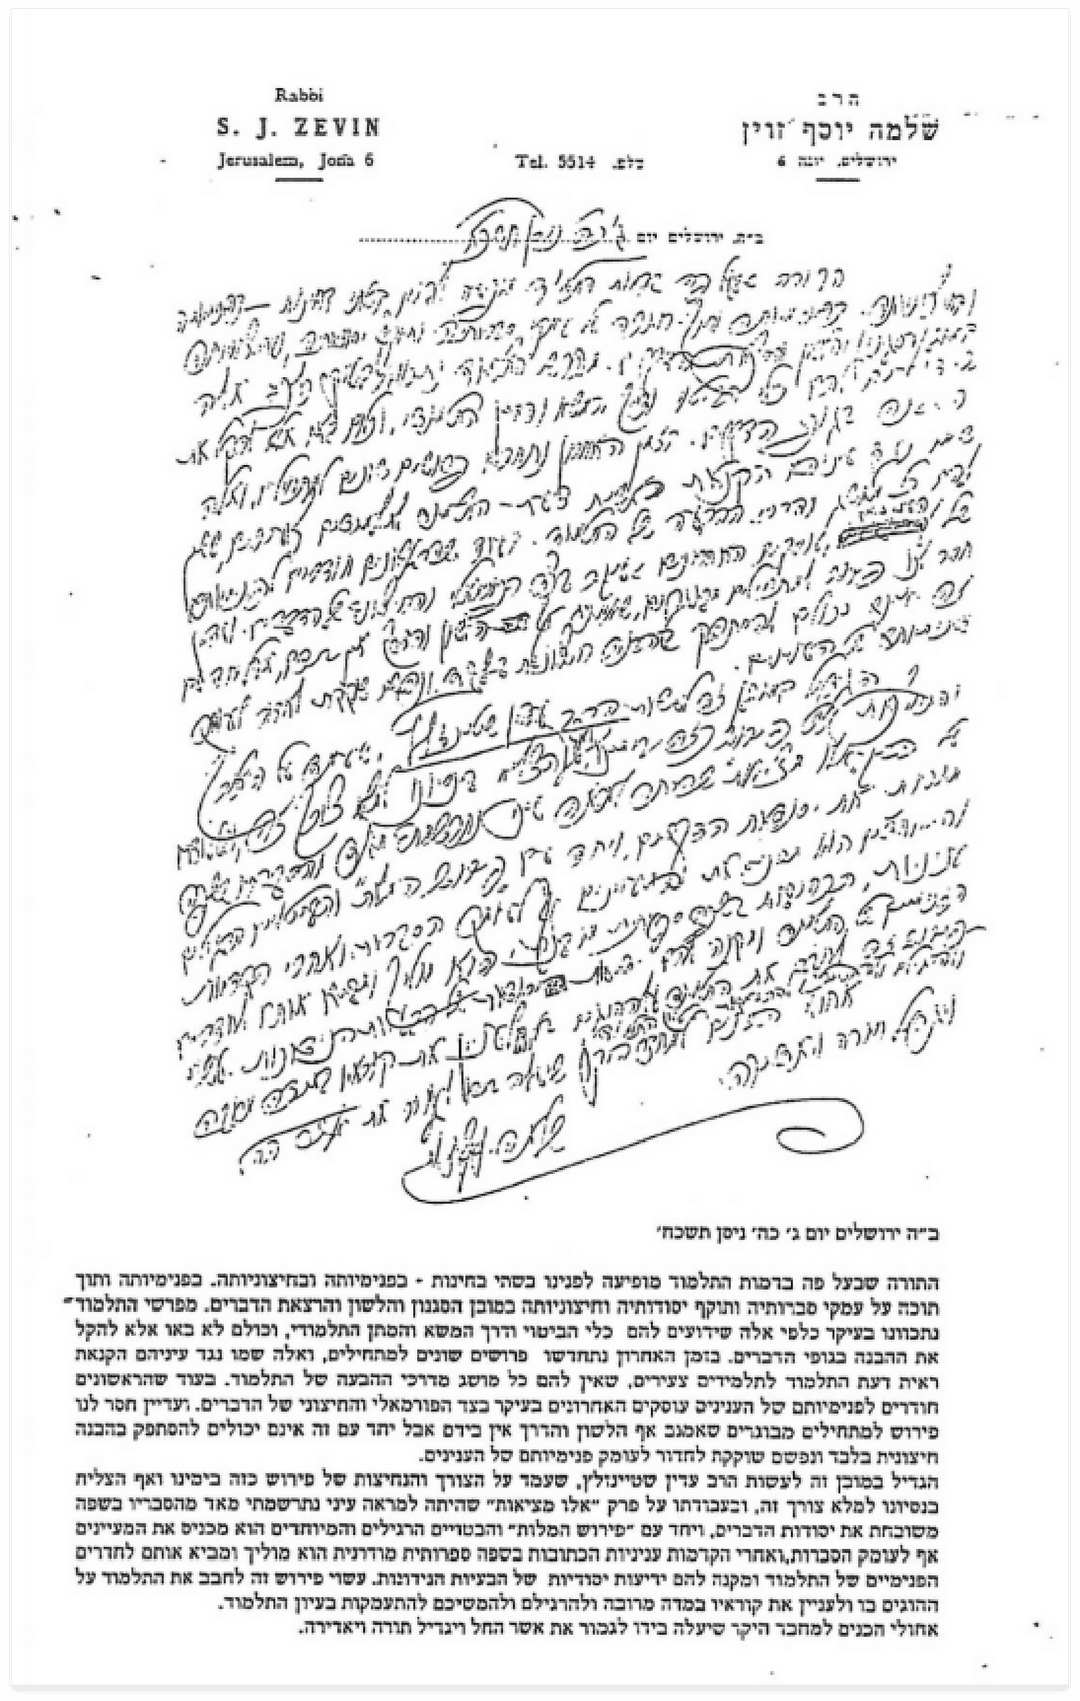 Rabbi Neria Letter